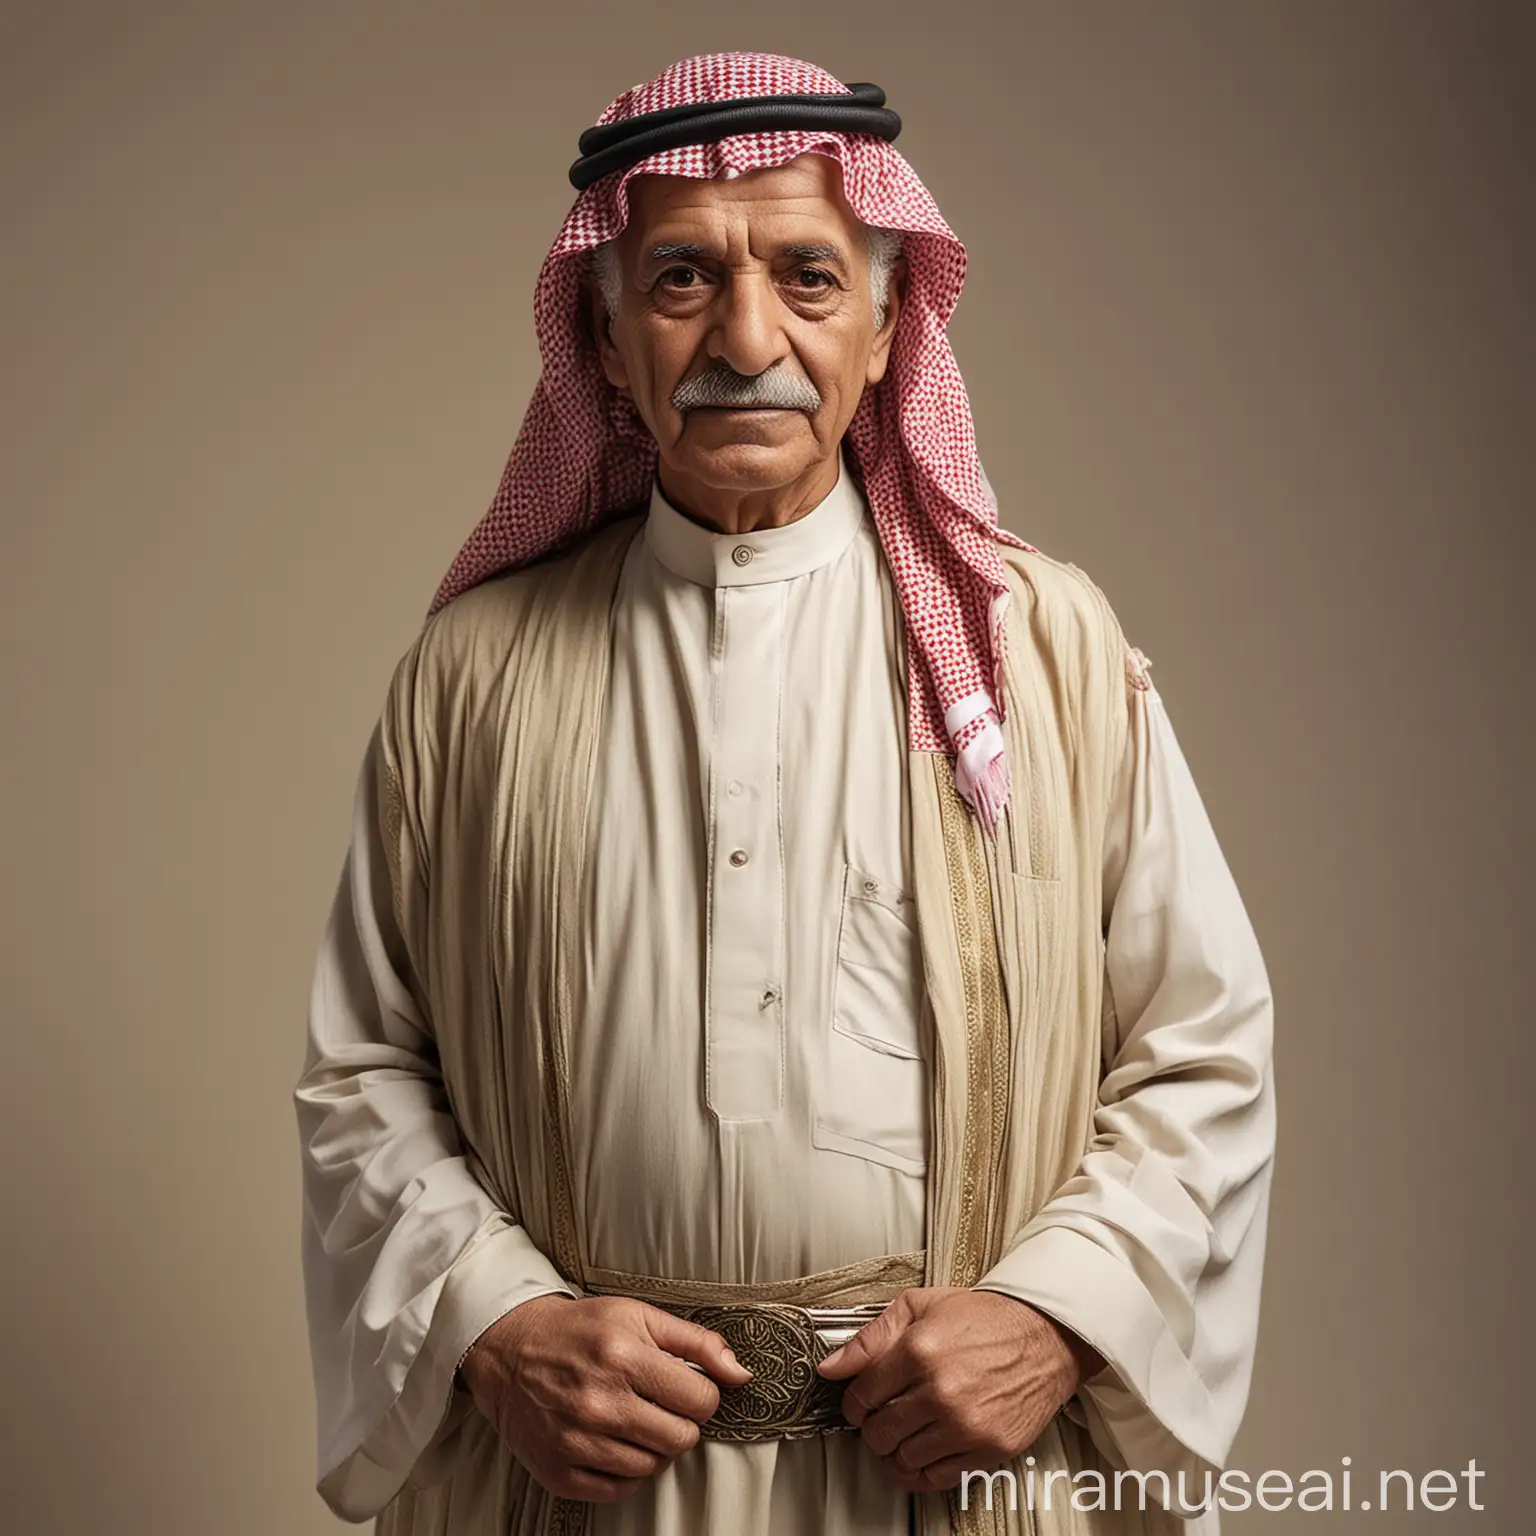 Saudi Arabian Elder in Traditional Saudi Attire